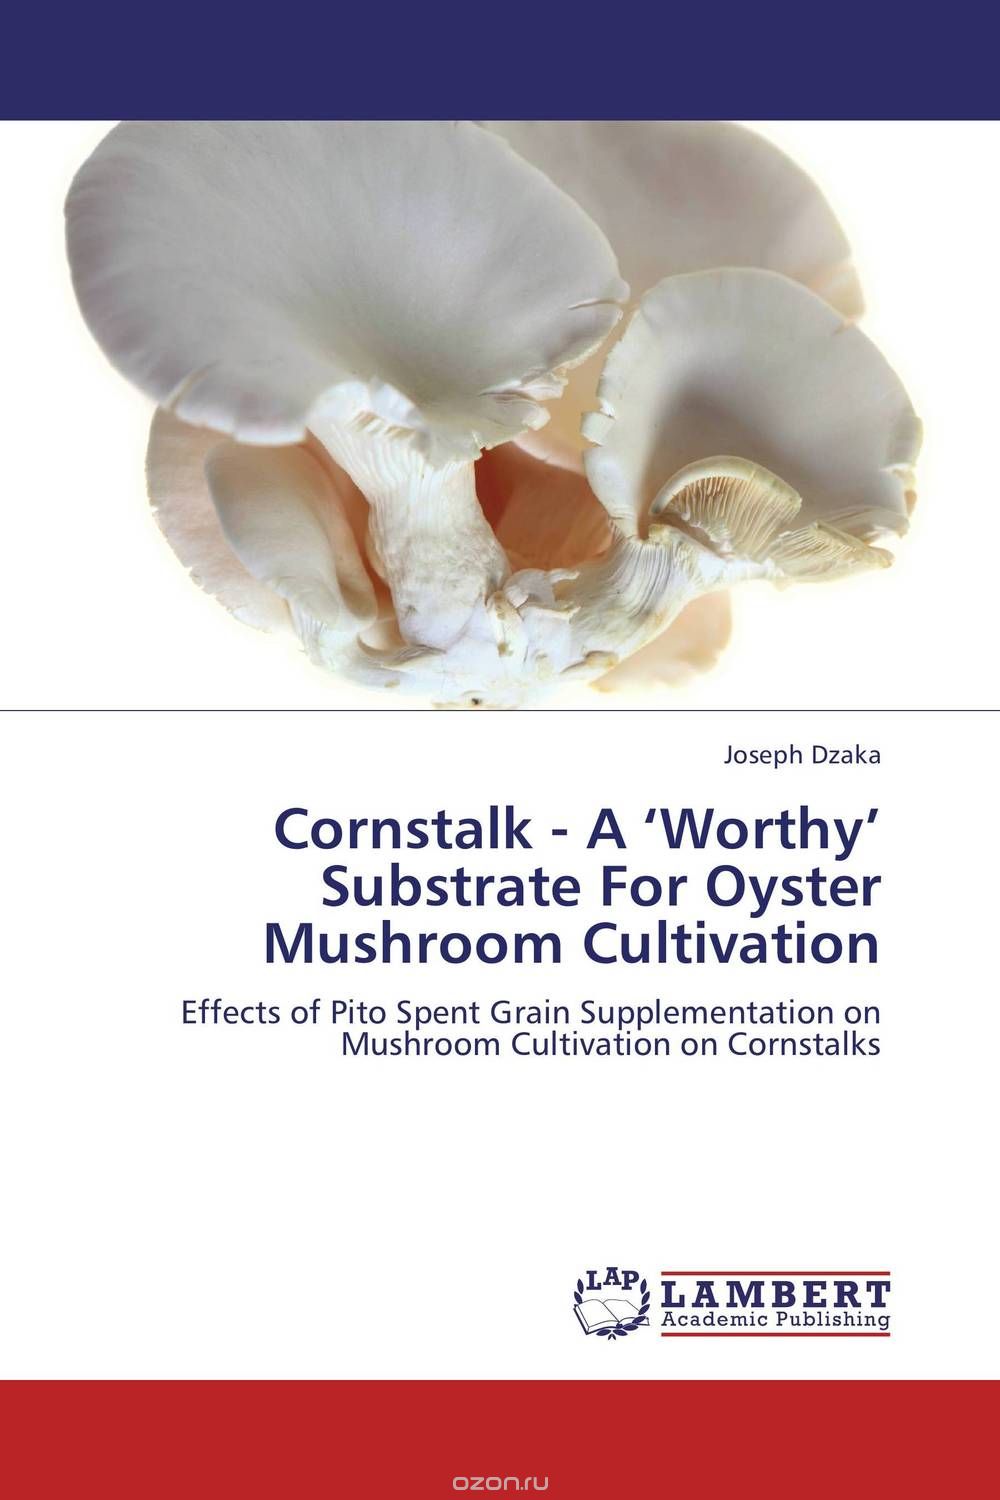 Скачать книгу "Cornstalk - A ‘Worthy’ Substrate For Oyster Mushroom Cultivation"